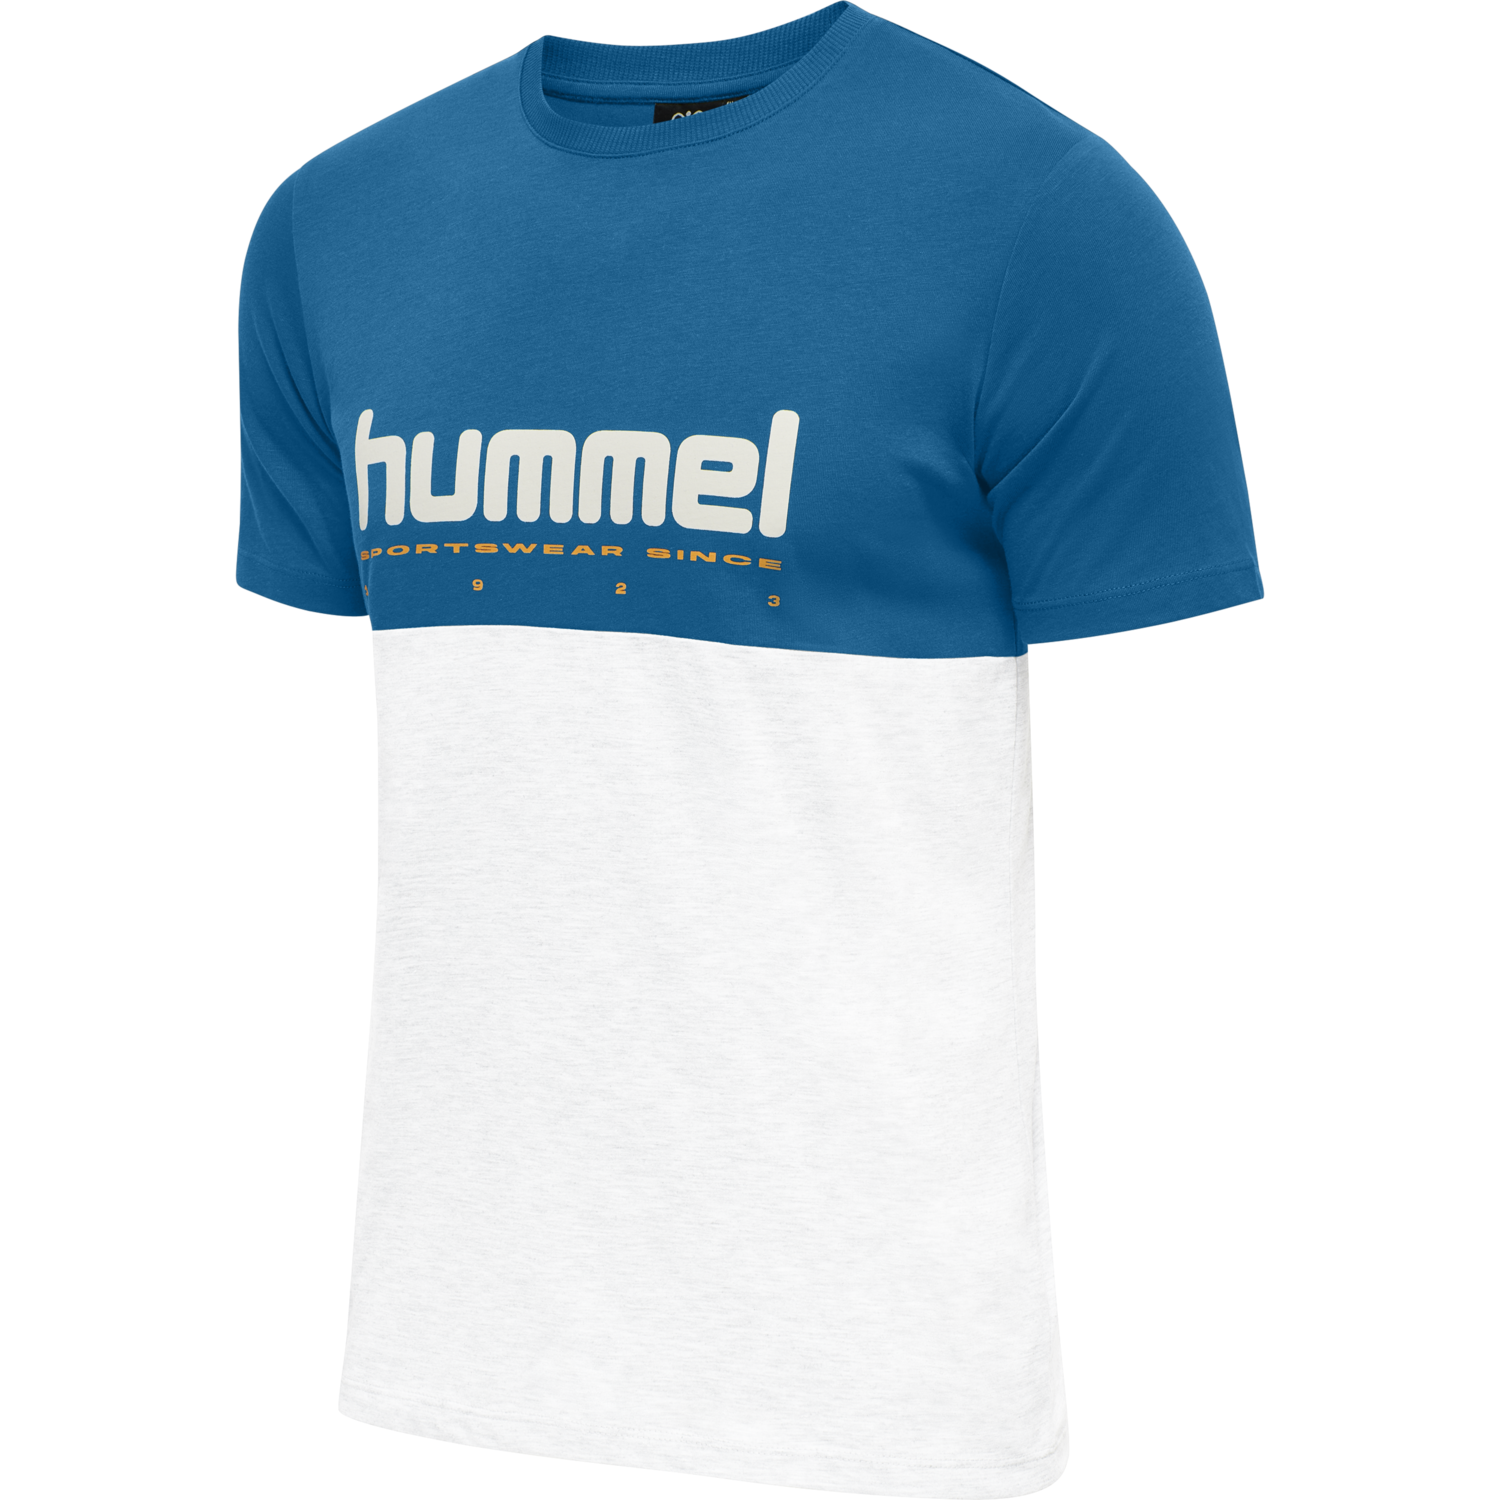 Hummel Womens Everton Travel Polo Shirt T-Shirt Tee Top Bering Sea 